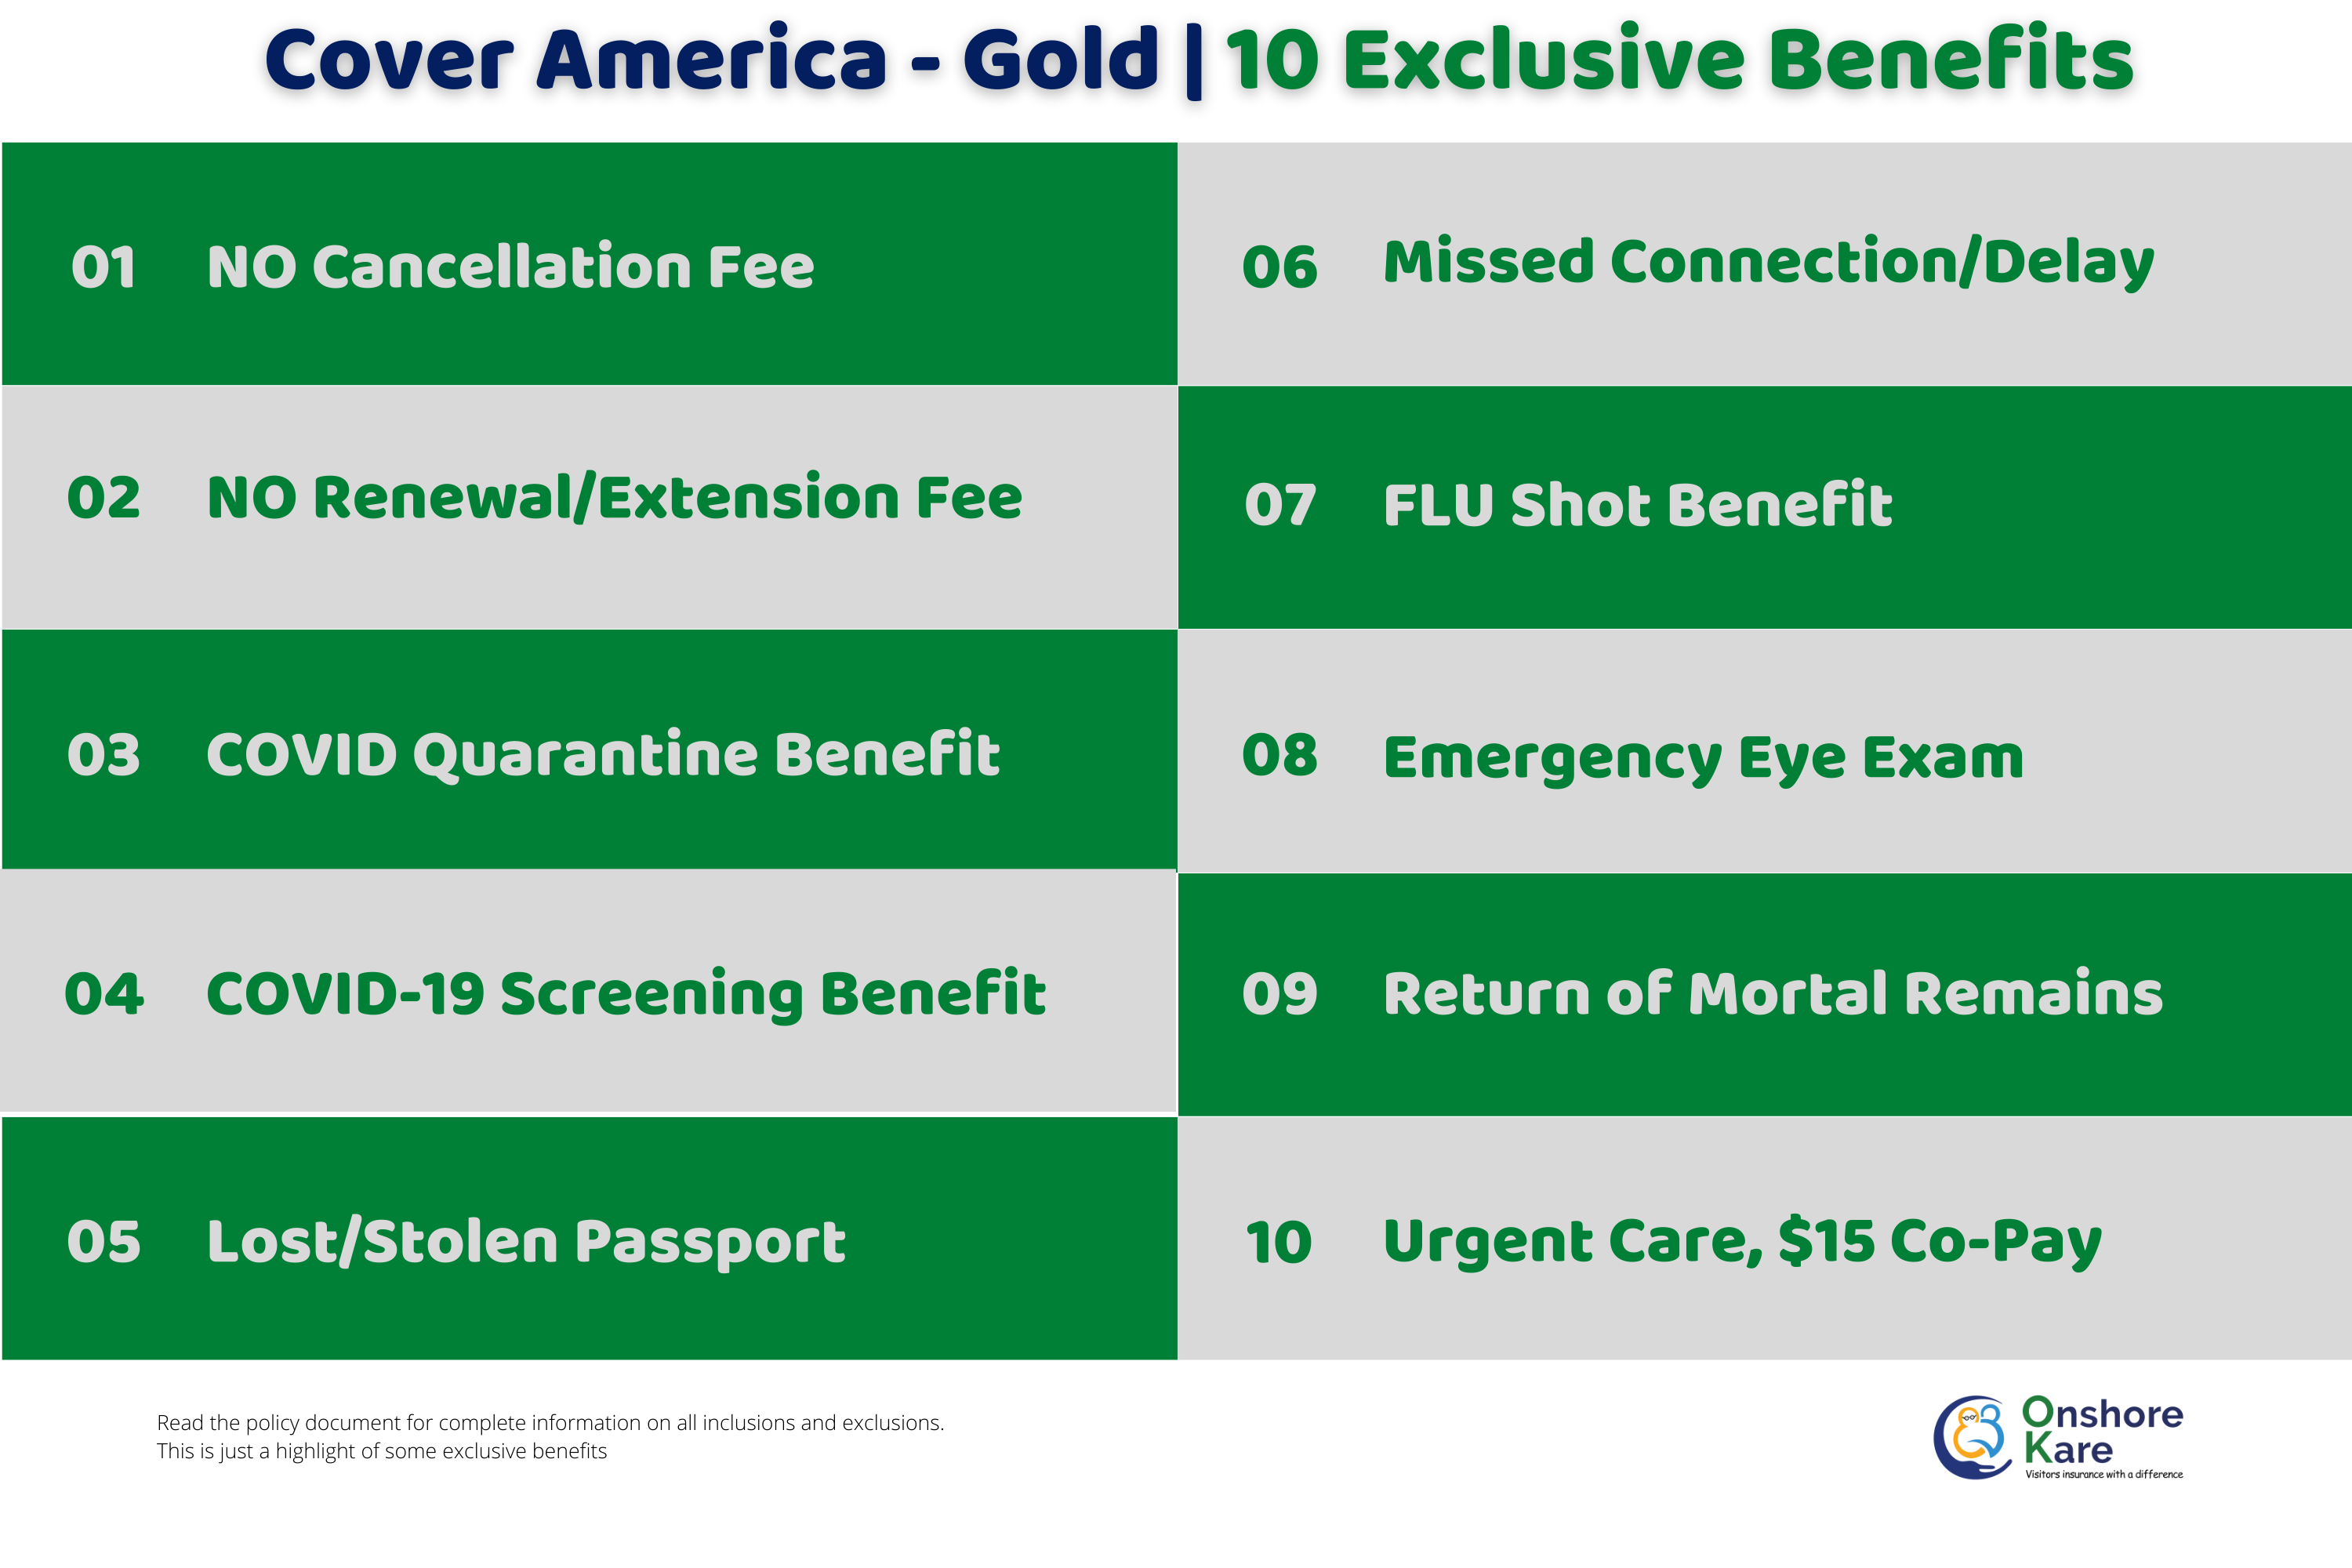 CoverAmerica Gold, 10 Exclusive Benefits